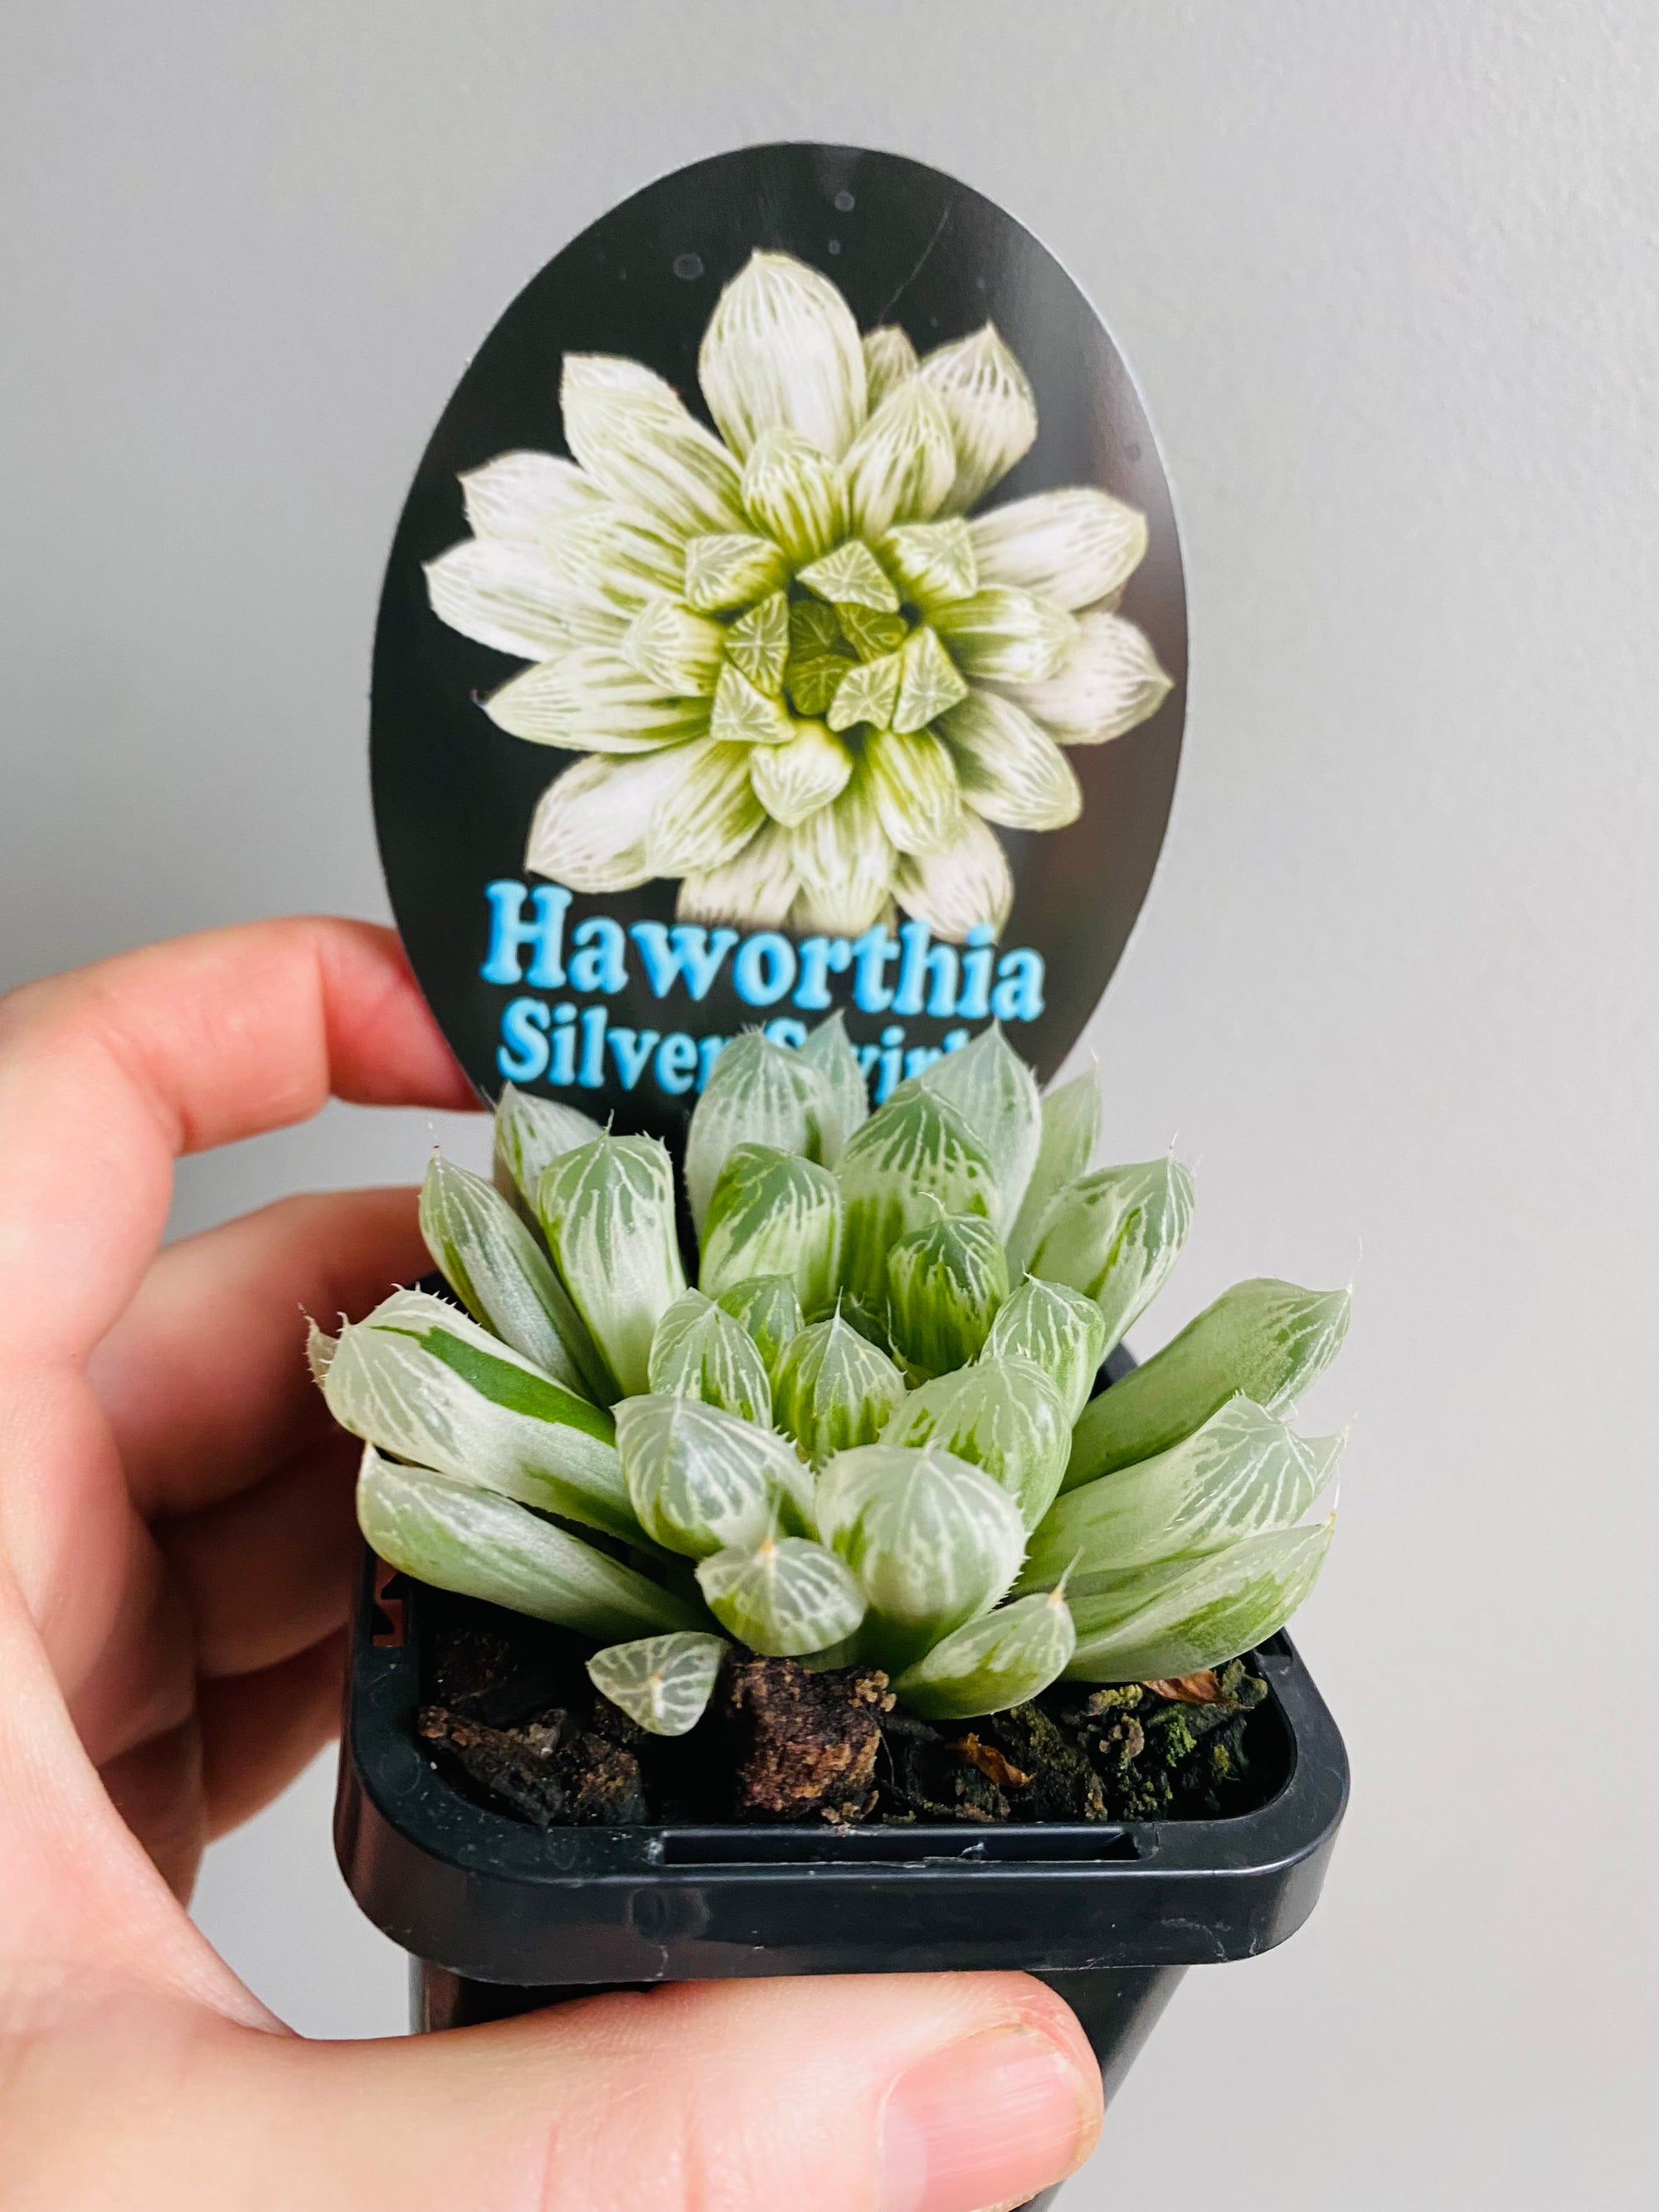 Haworthia cooperi cv. 'Silver Swirls'